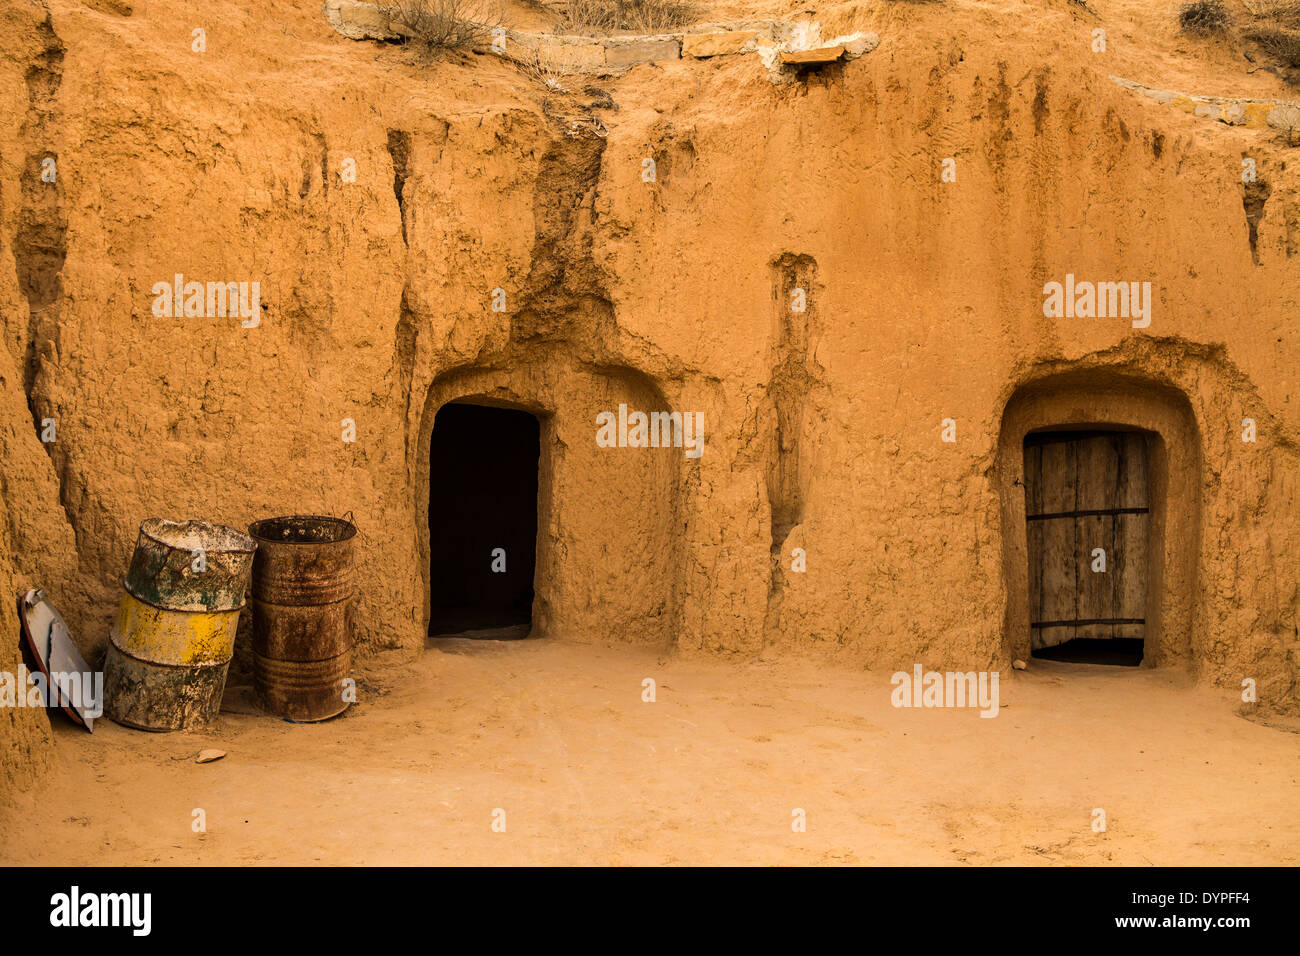 Mud huts of Berber communities in Tunisia. Stock Photo